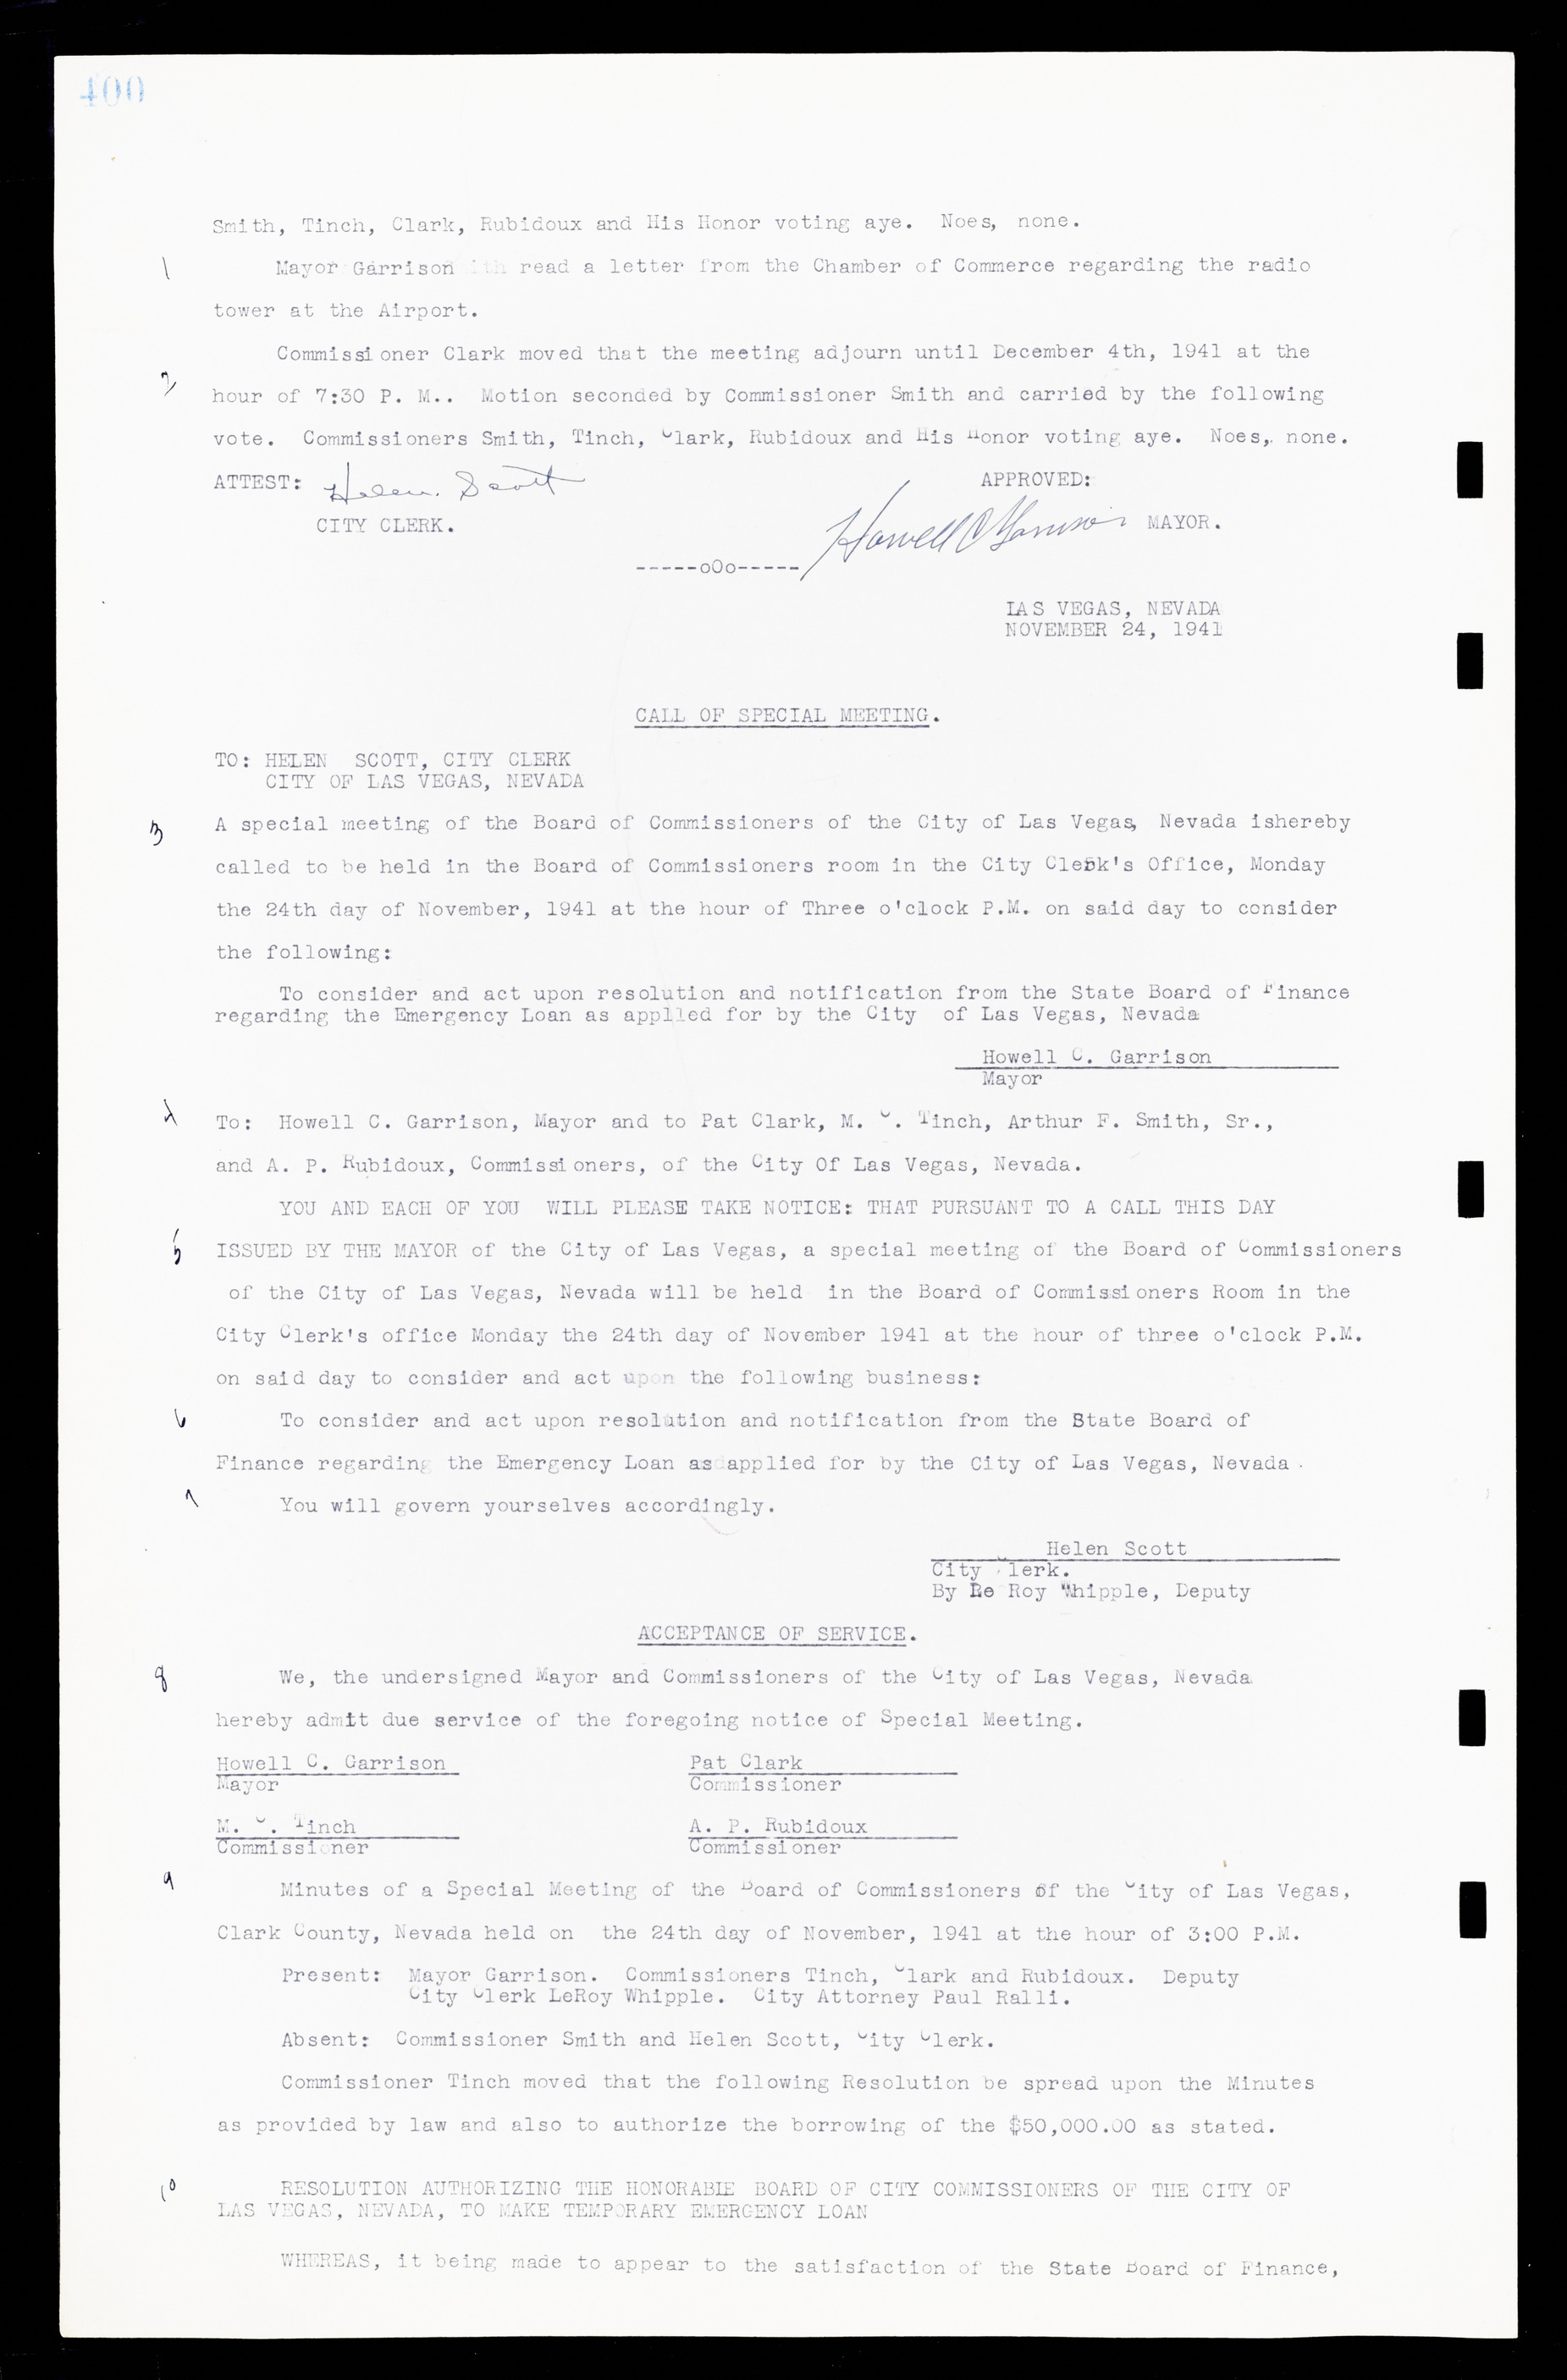 Las Vegas City Commission Minutes, February 17, 1937 to August 4, 1942, lvc000004-426